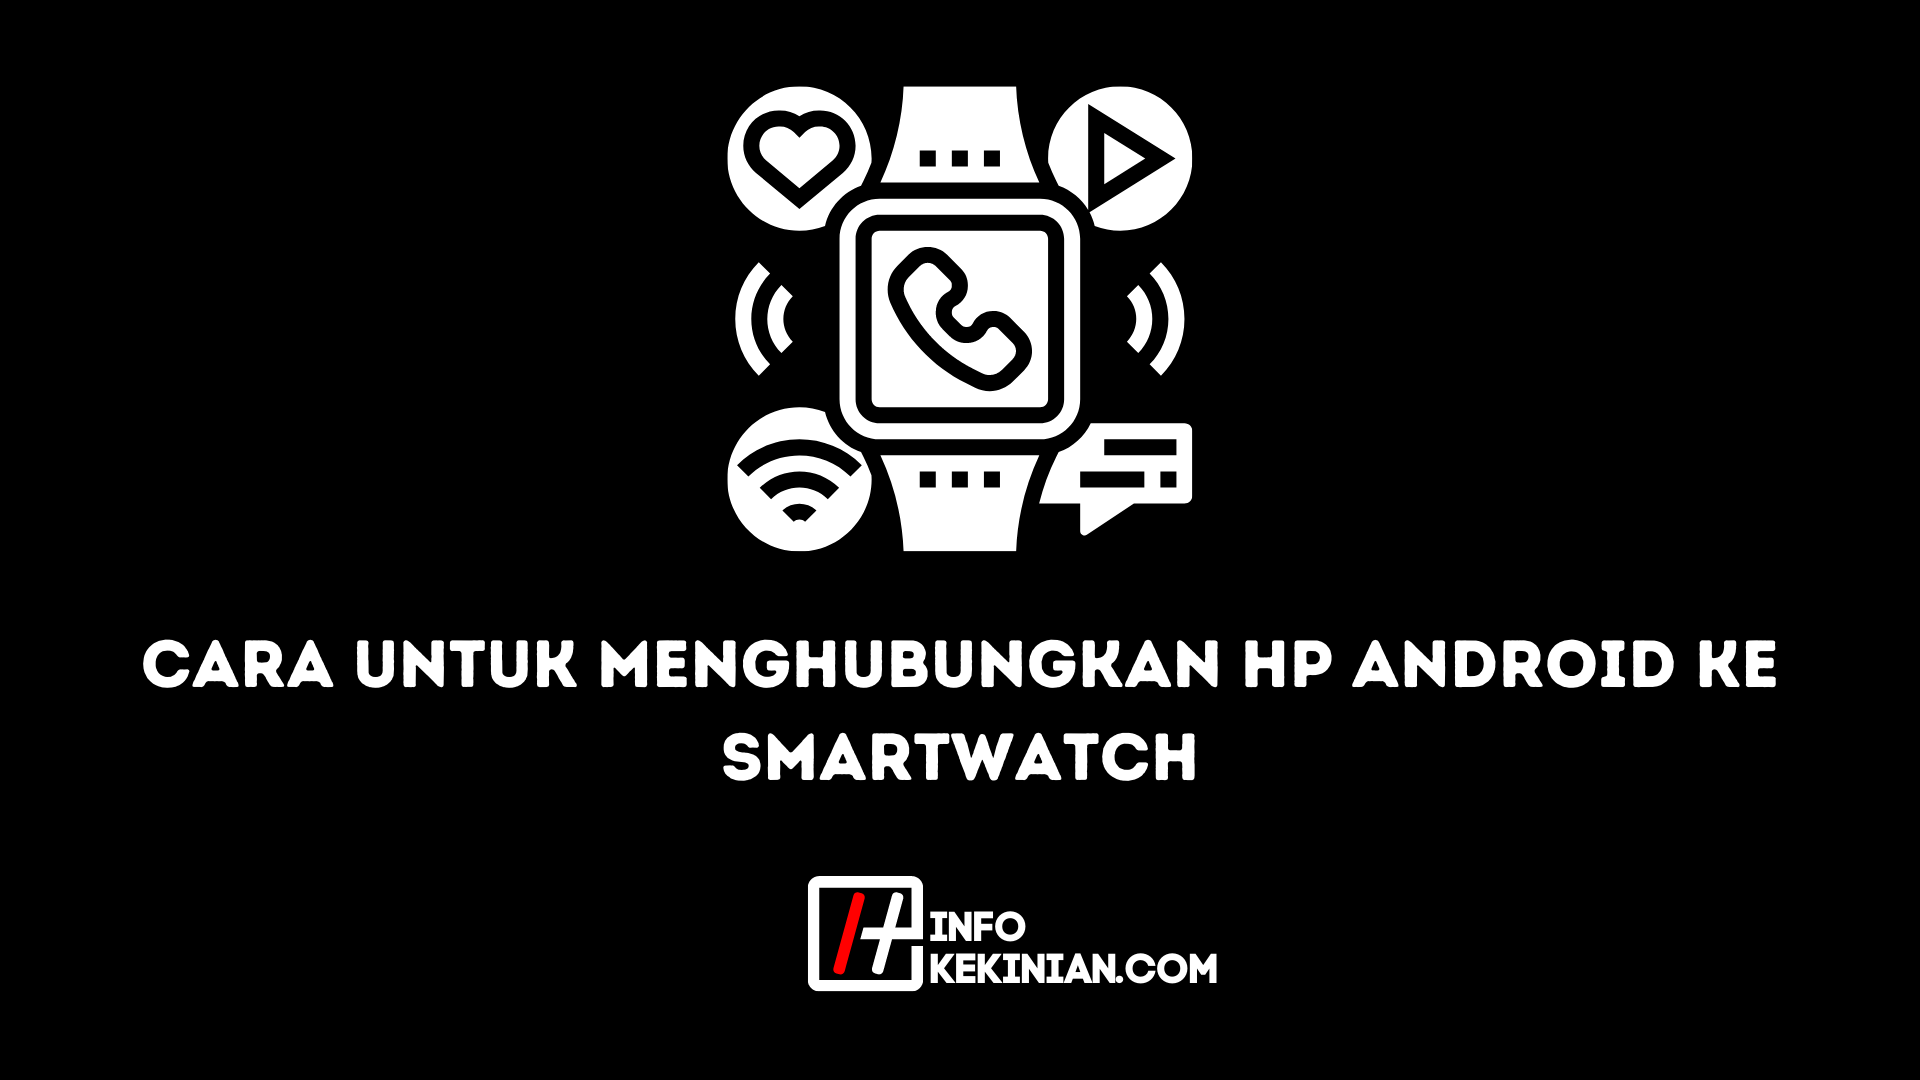 Cara untuk Menghubungkan Hp ke Smartwatch